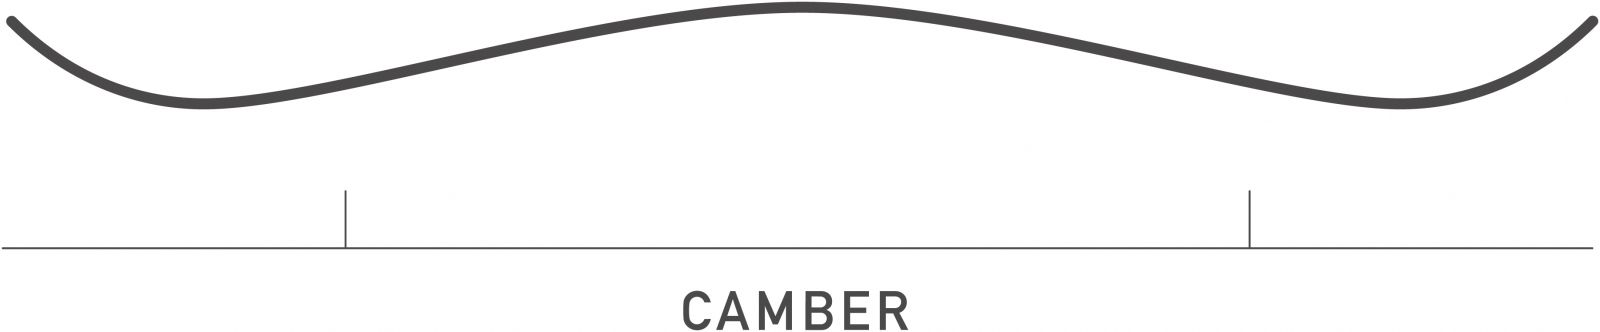 Camber Snowboard Bend Shape